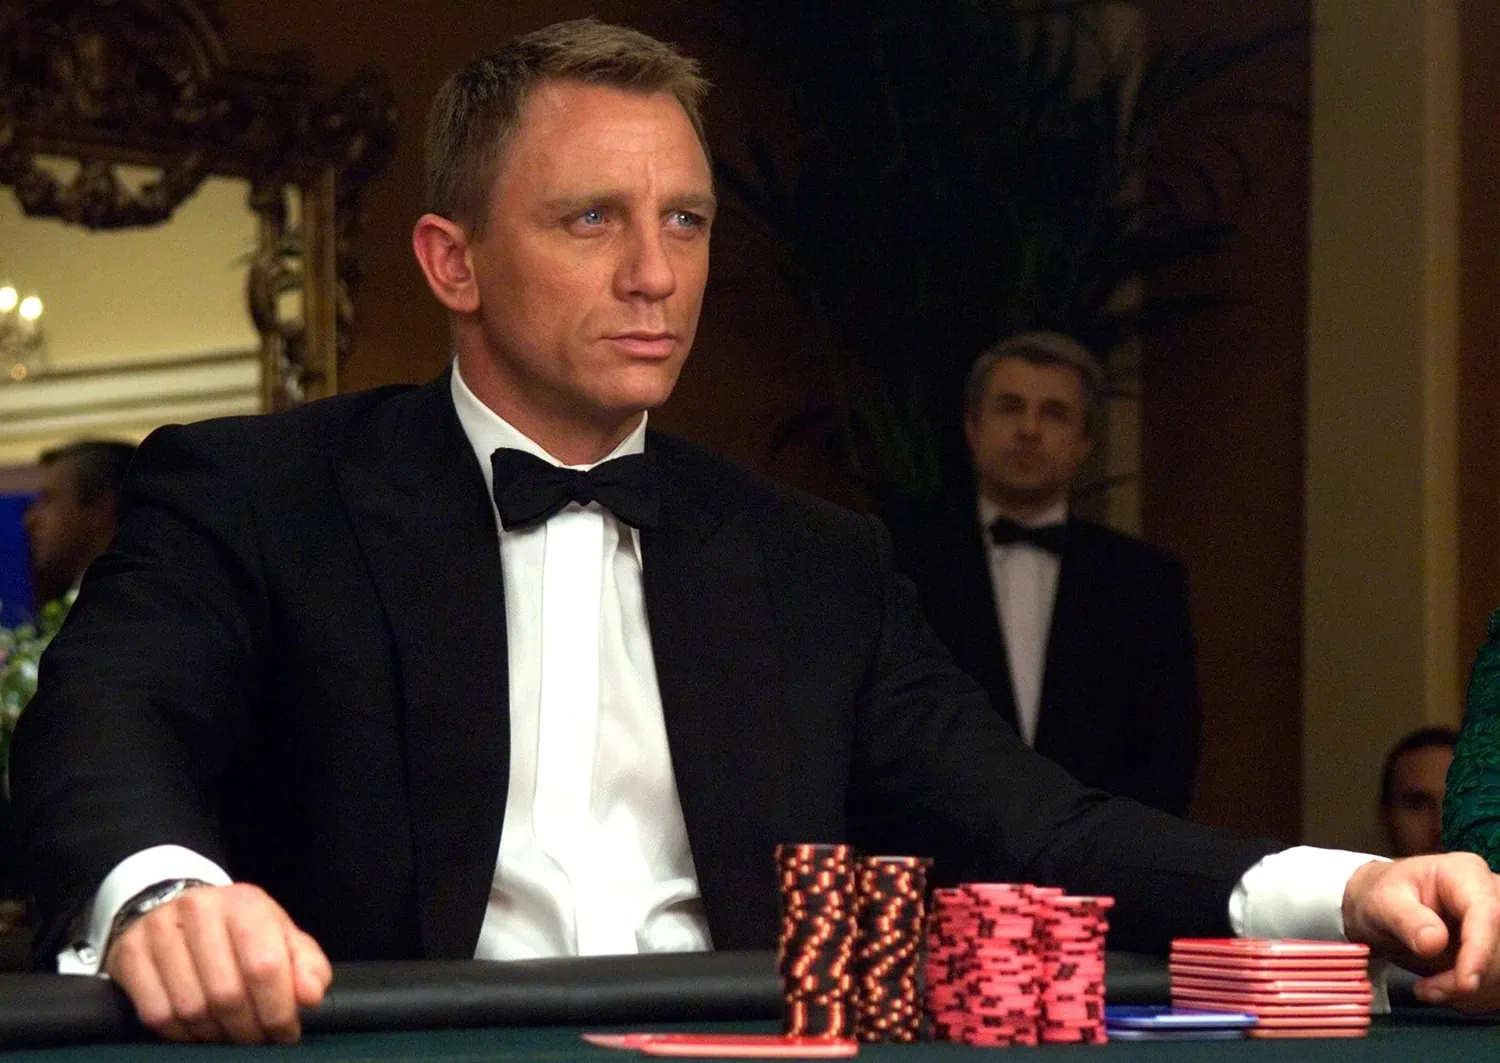 James_Bond_Casino_Royale.webp